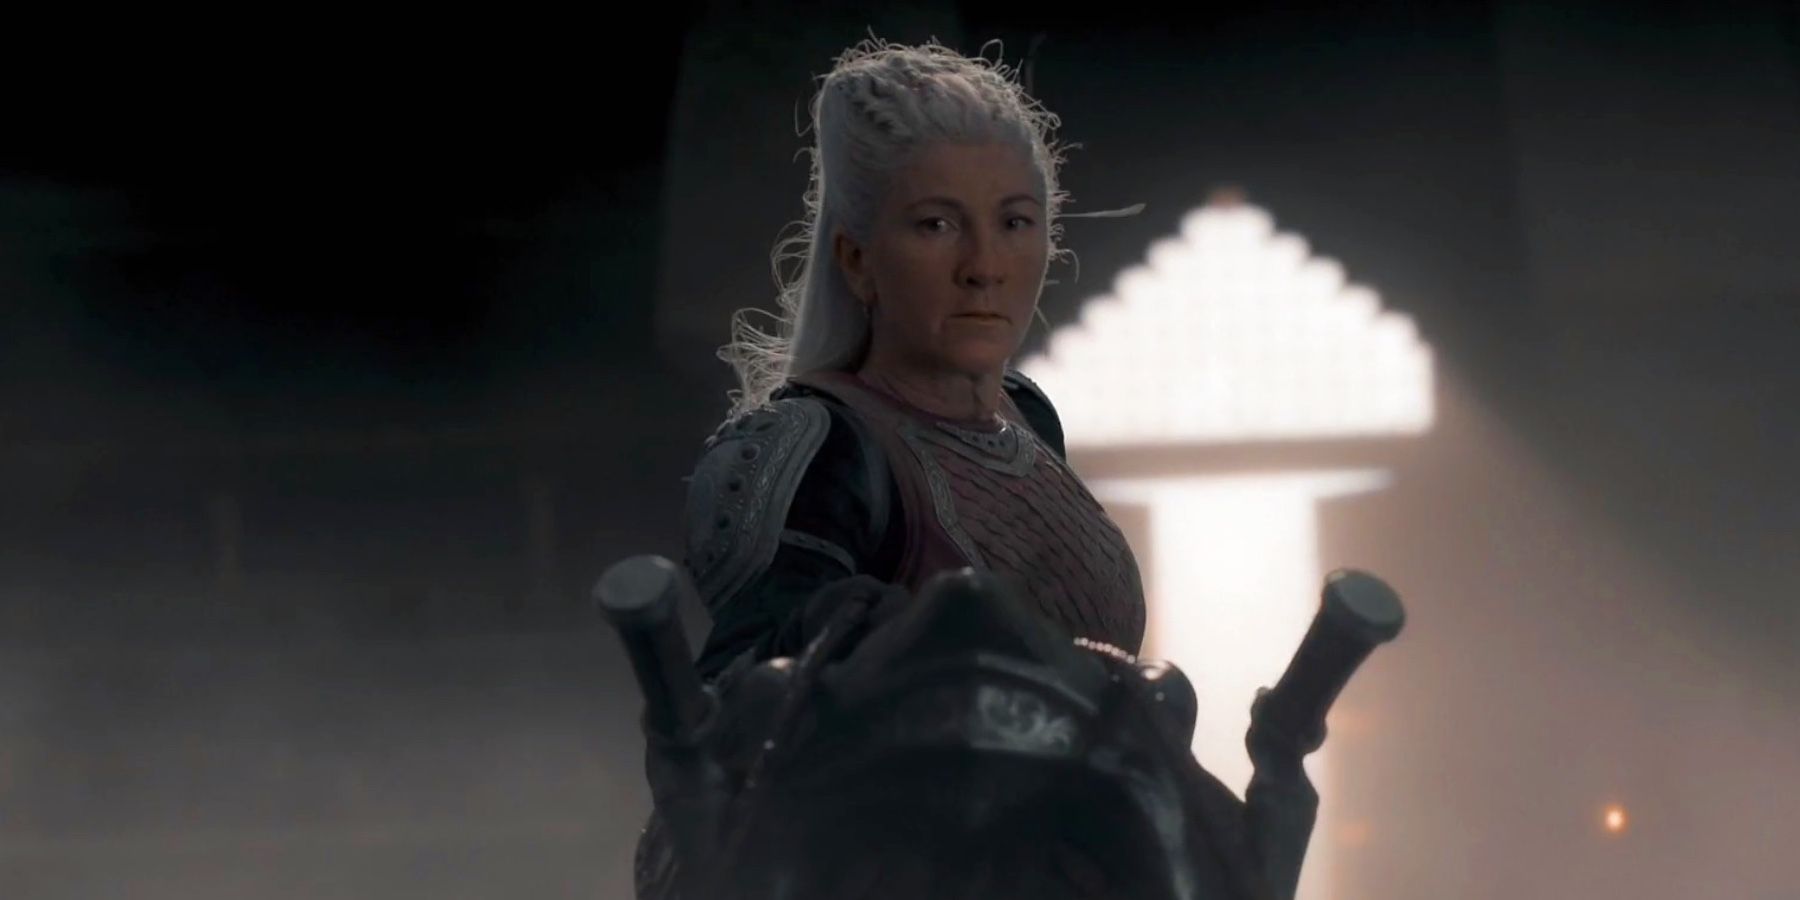 Eve Best as Rhaenys Targaryen in House Of The Dragon episode 9